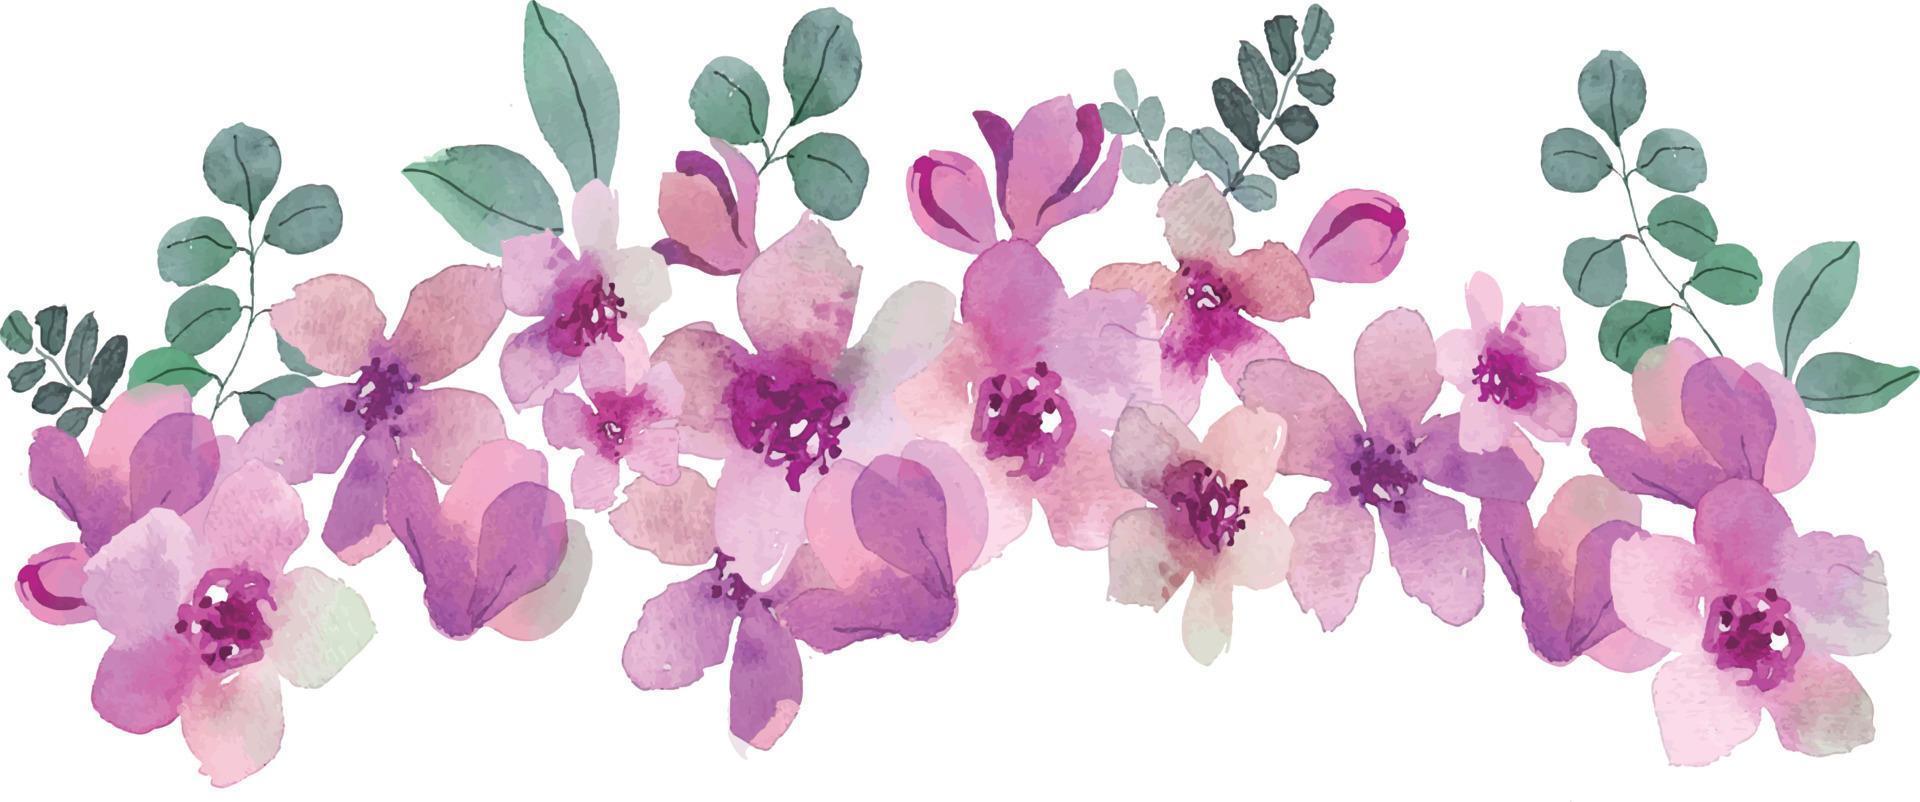 Watercolor Flowers Bouquet in Pink Flowers vector